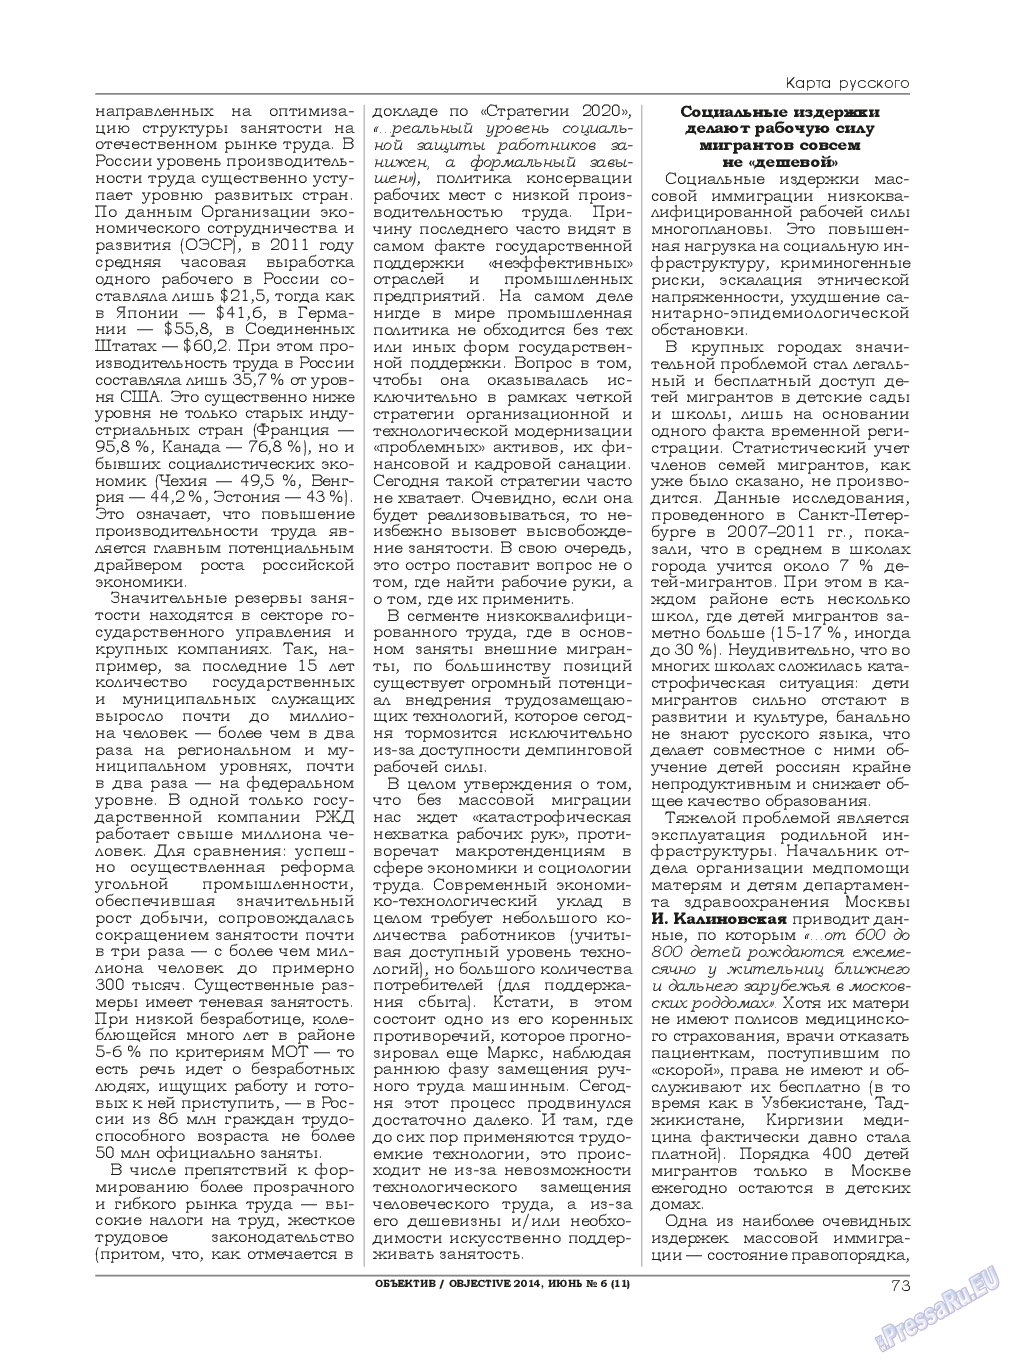 Объектив EU, журнал. 2014 №6 стр.73